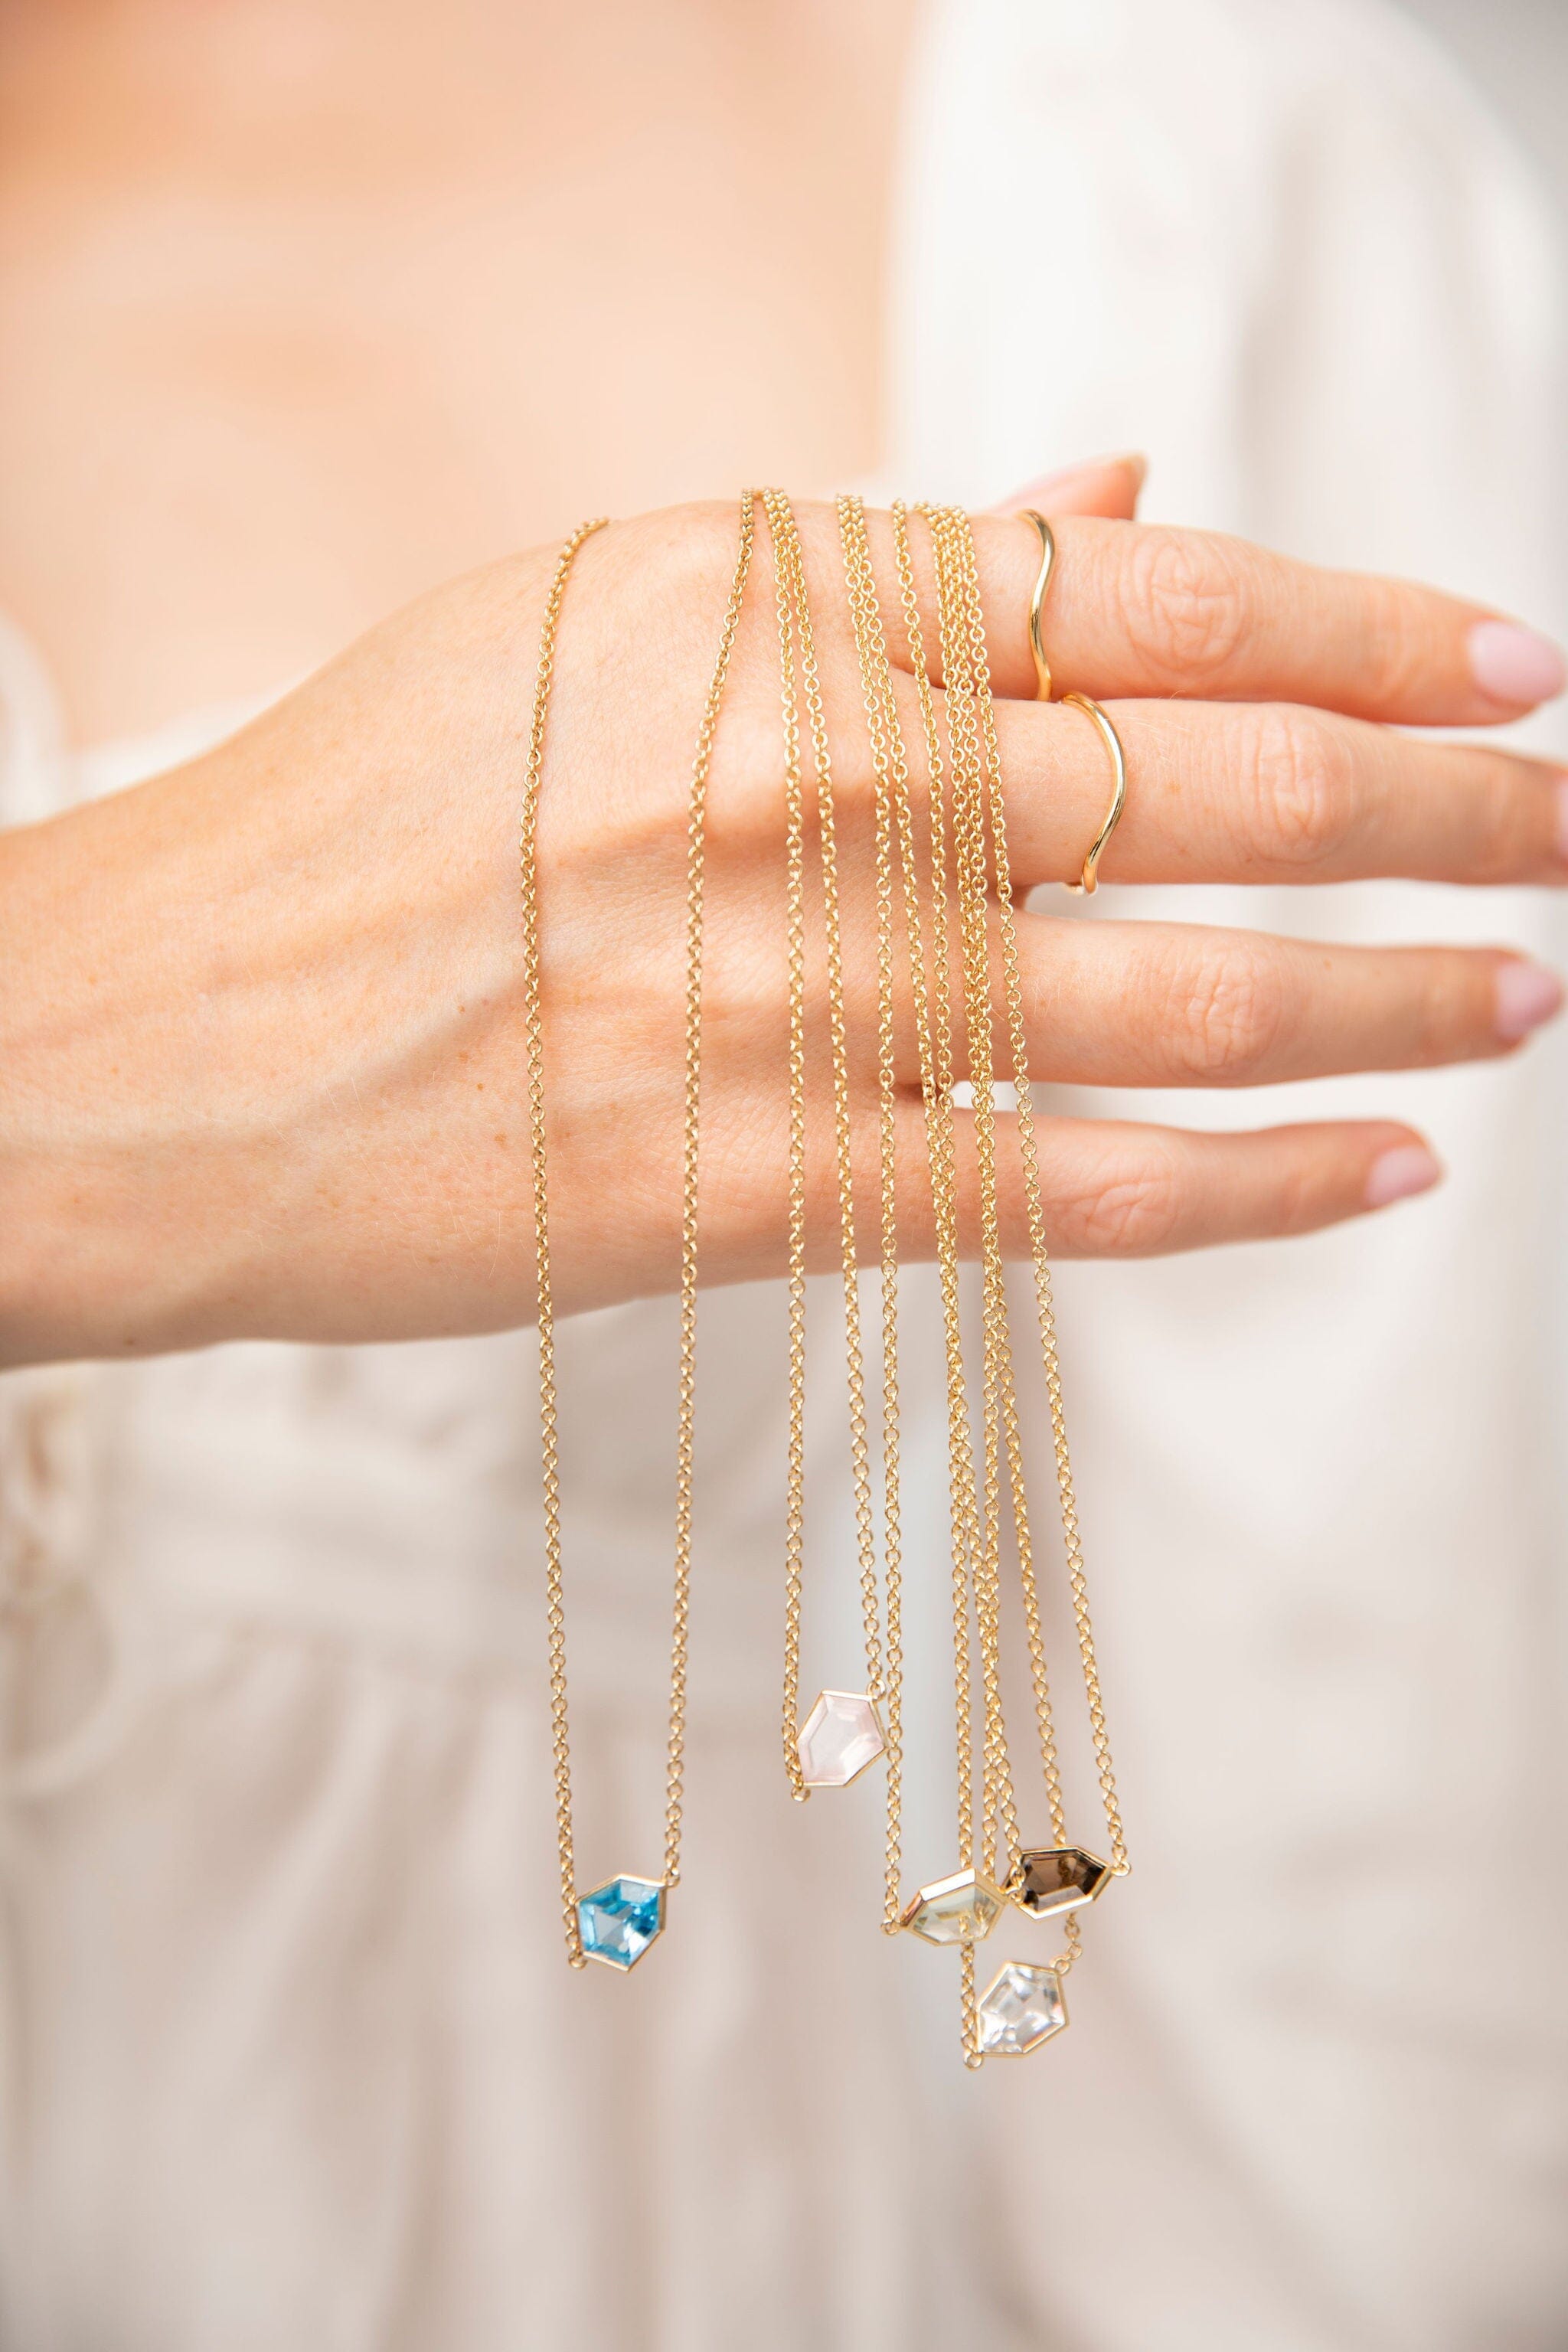 True Blue Shield Jollie Necklace Necklaces - BONDEYE JEWELRY ®